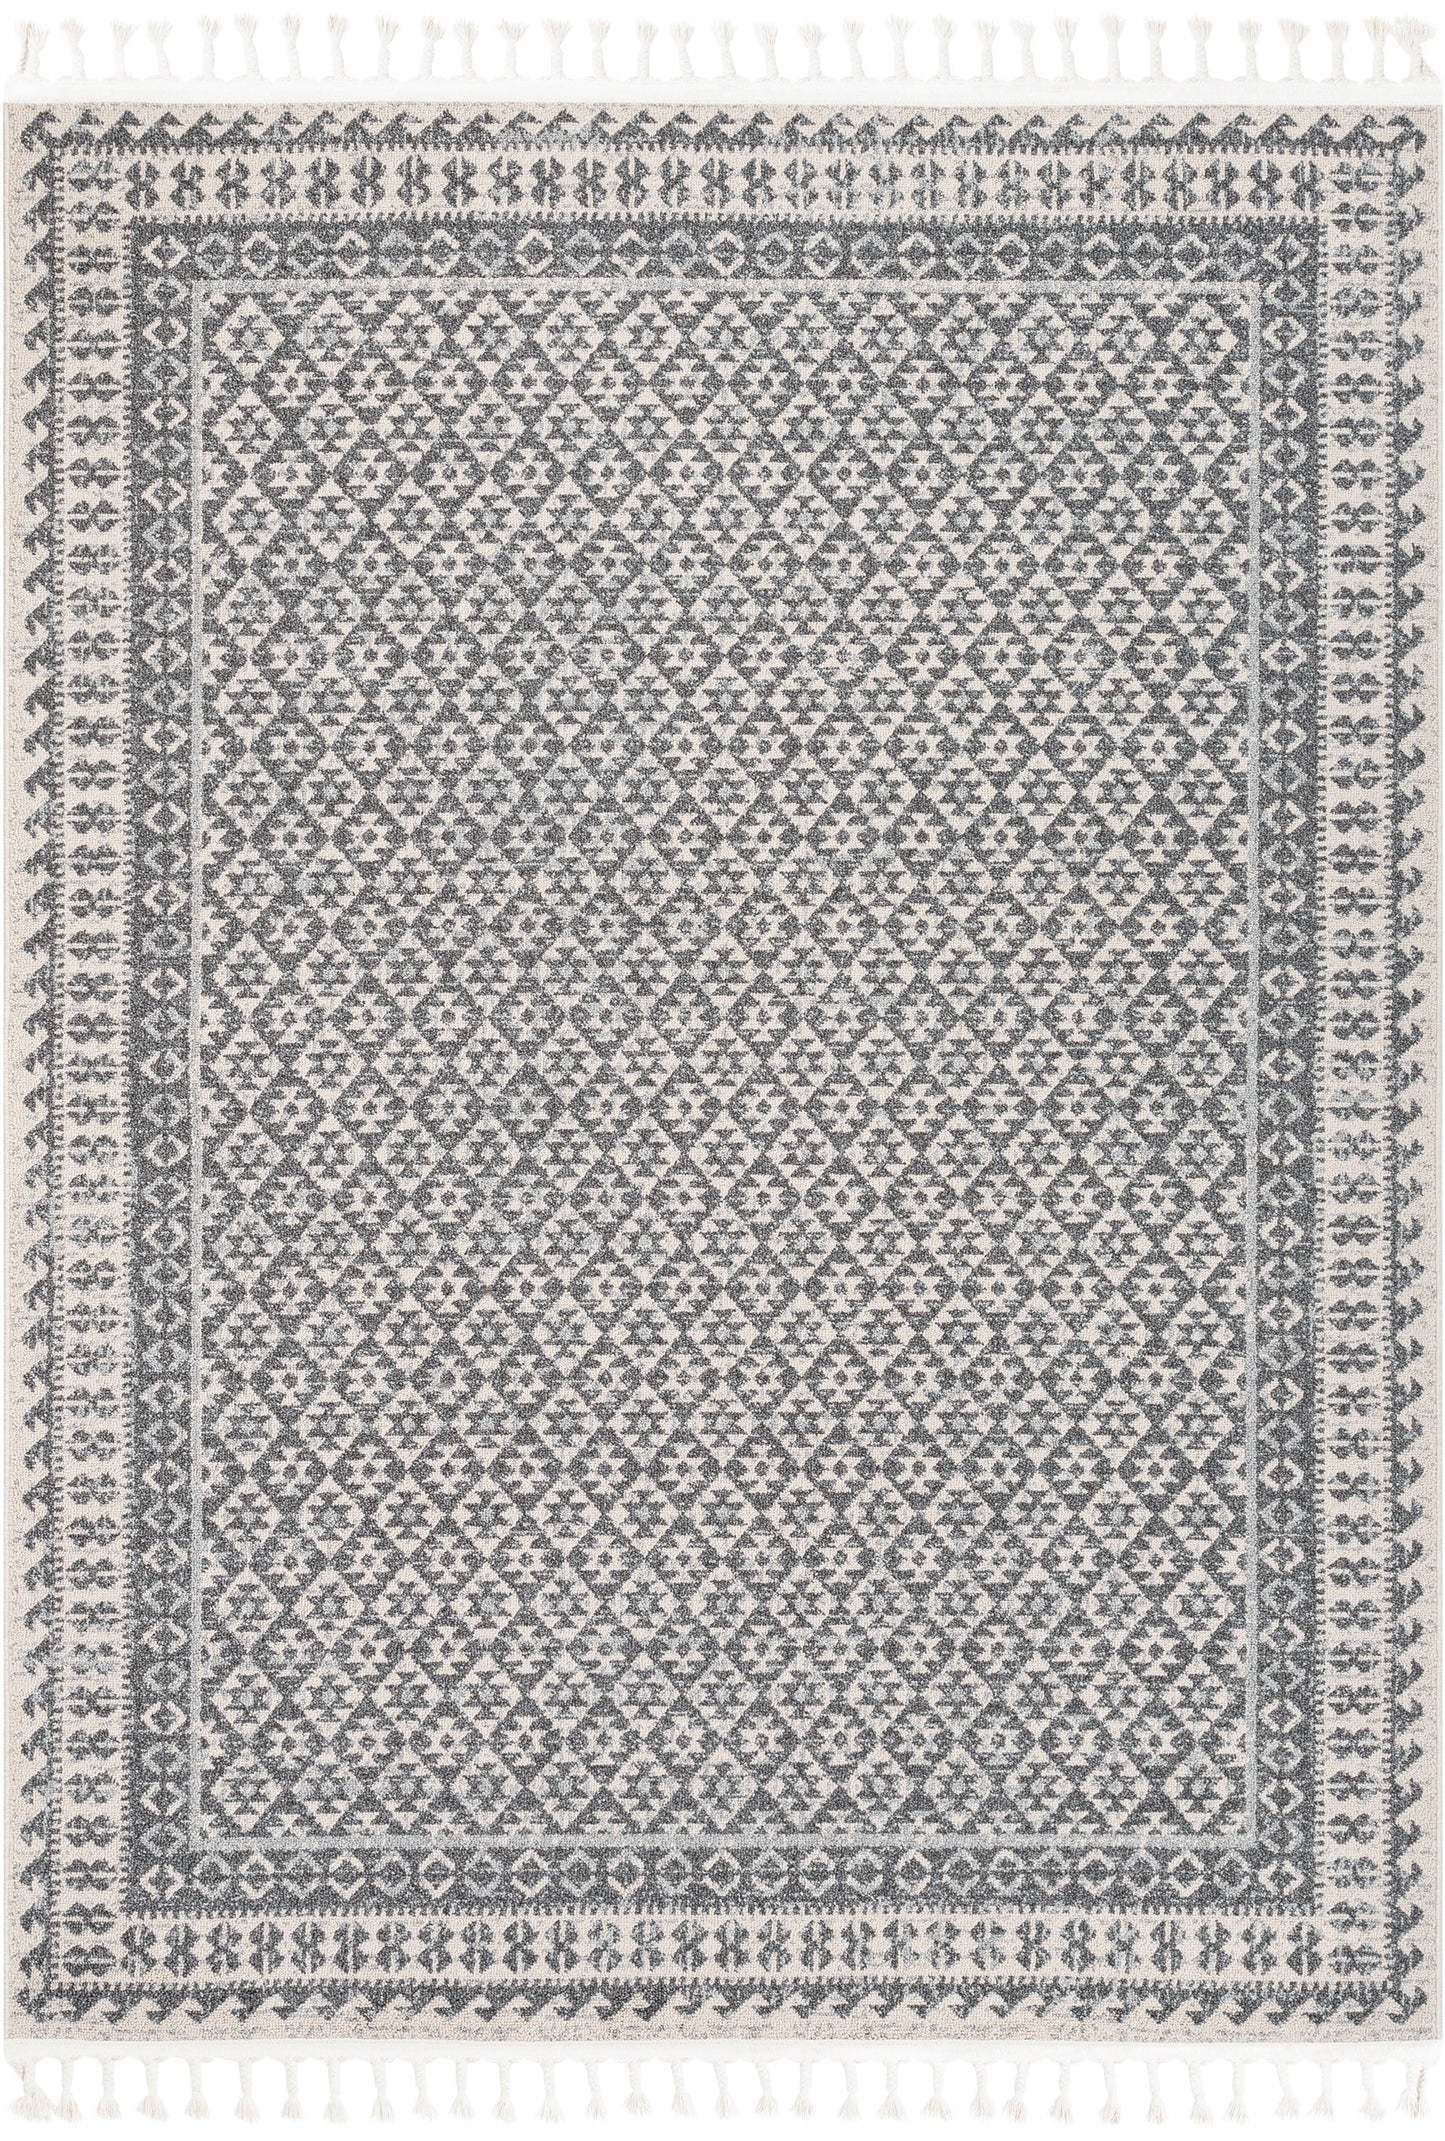 Callista Tribal Trellis Pattern Grey Kilim-Style RugLDL-207